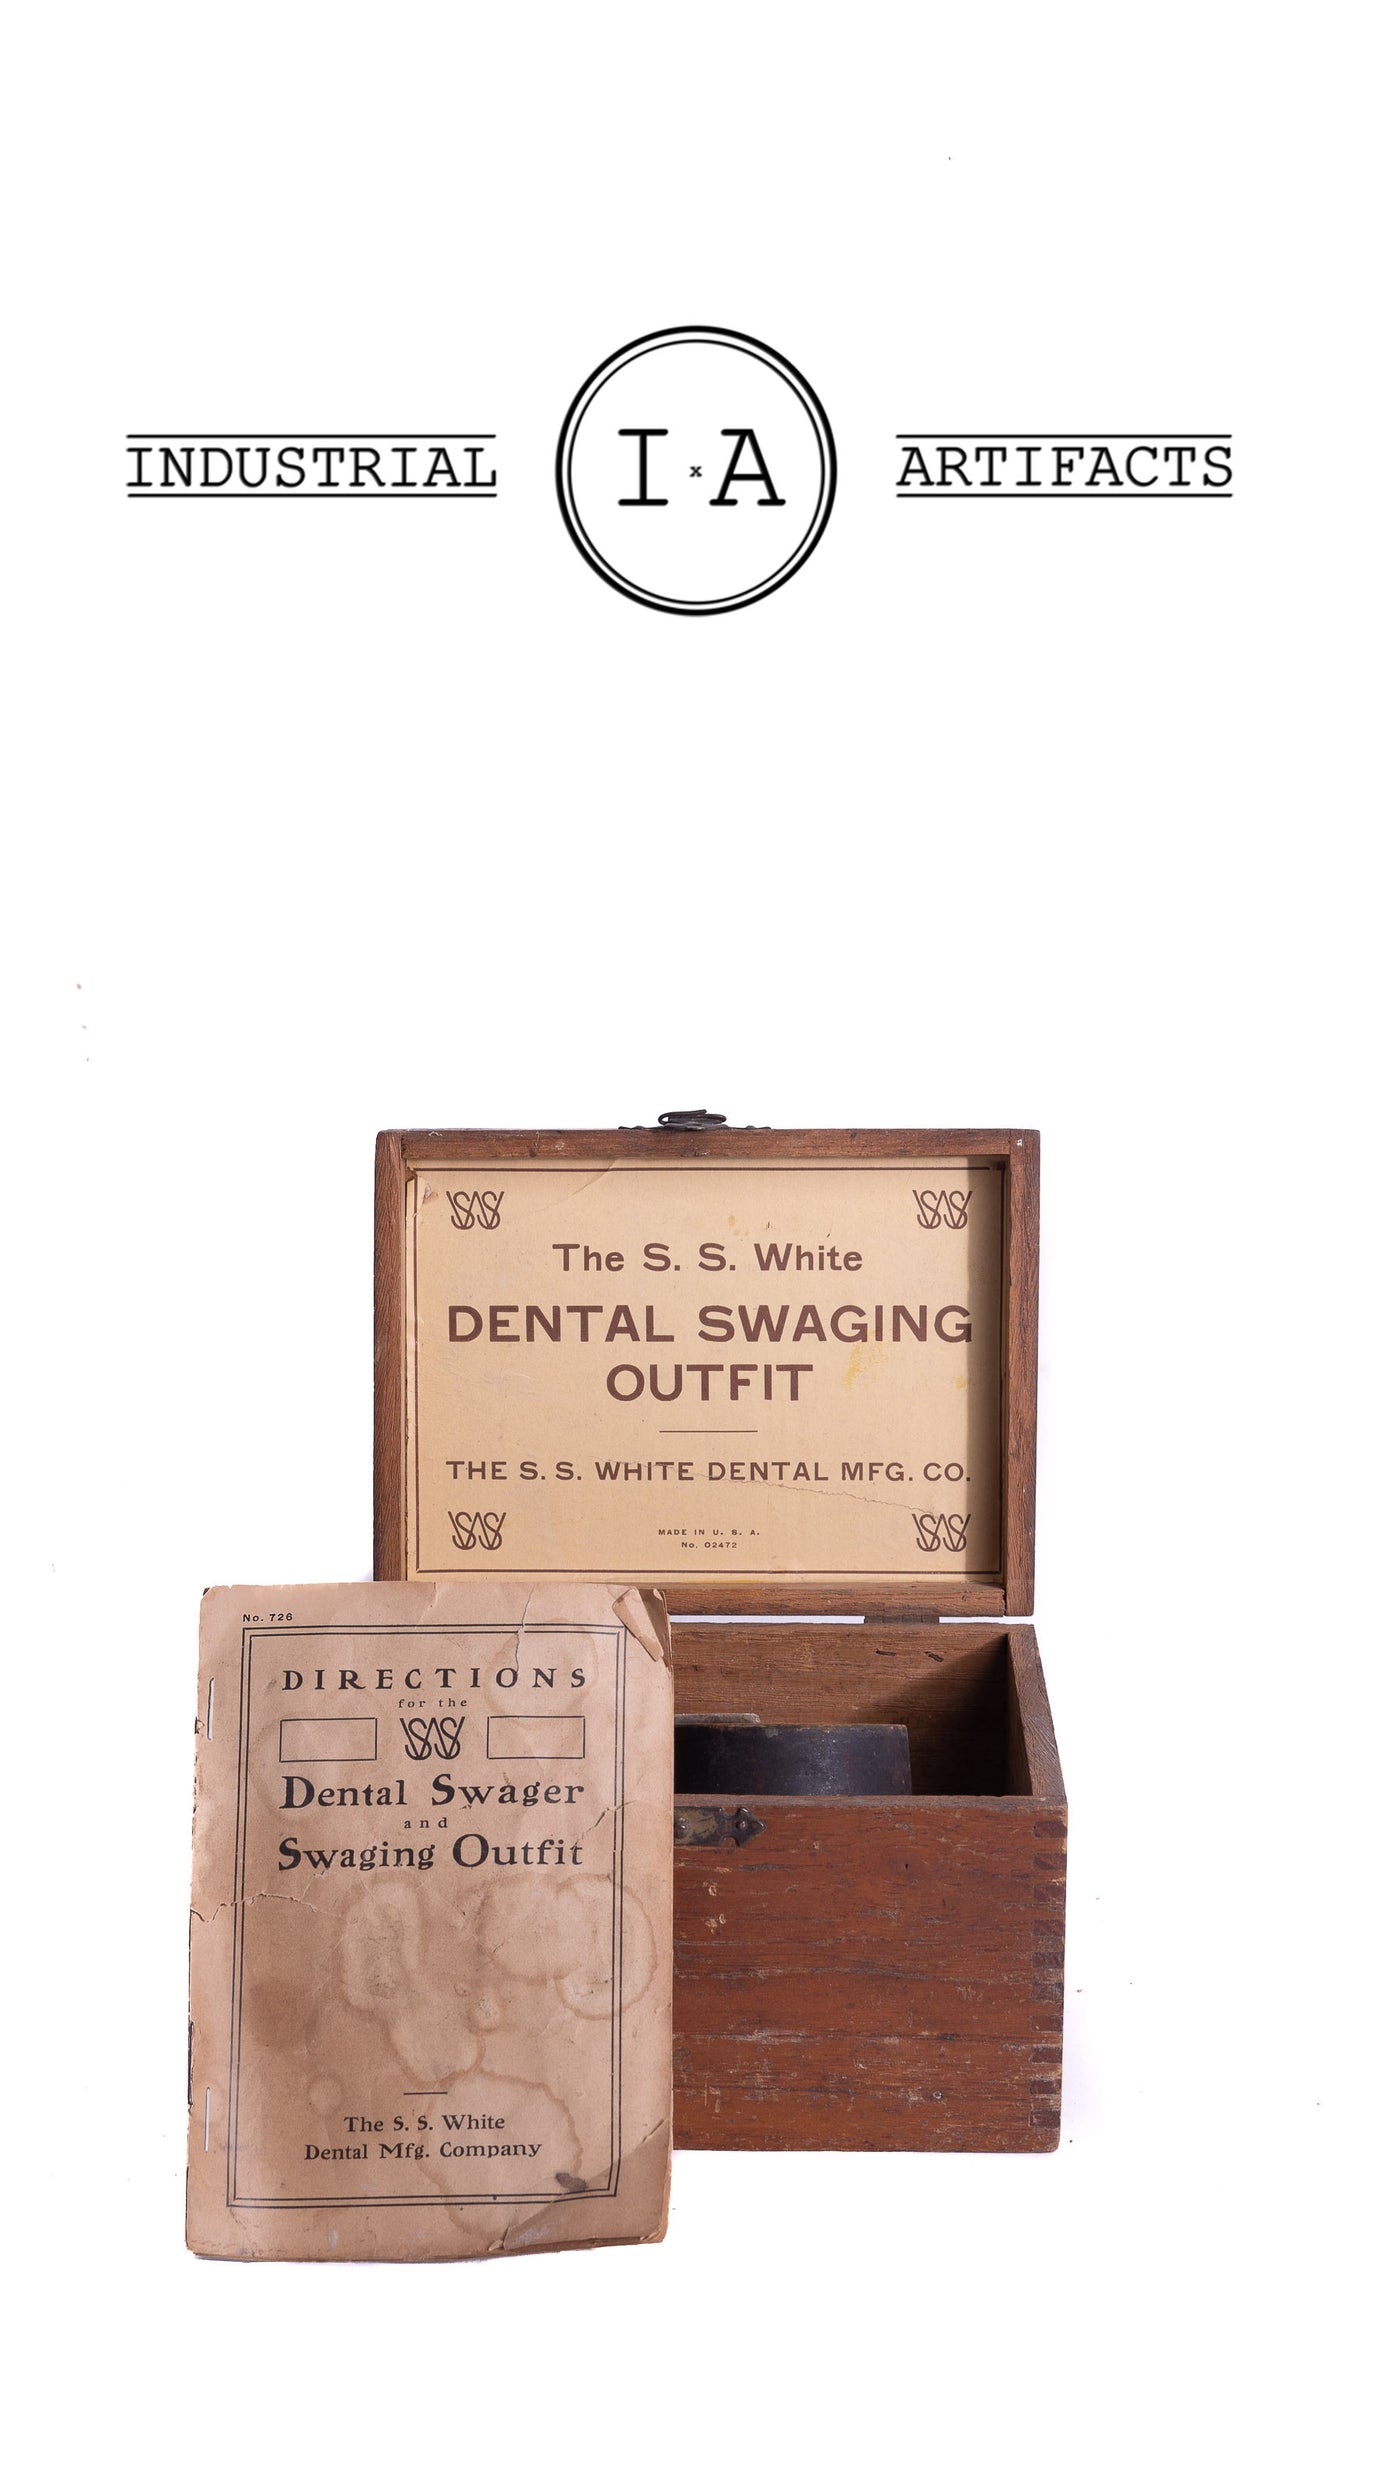 Early 20th Century Dental Kit